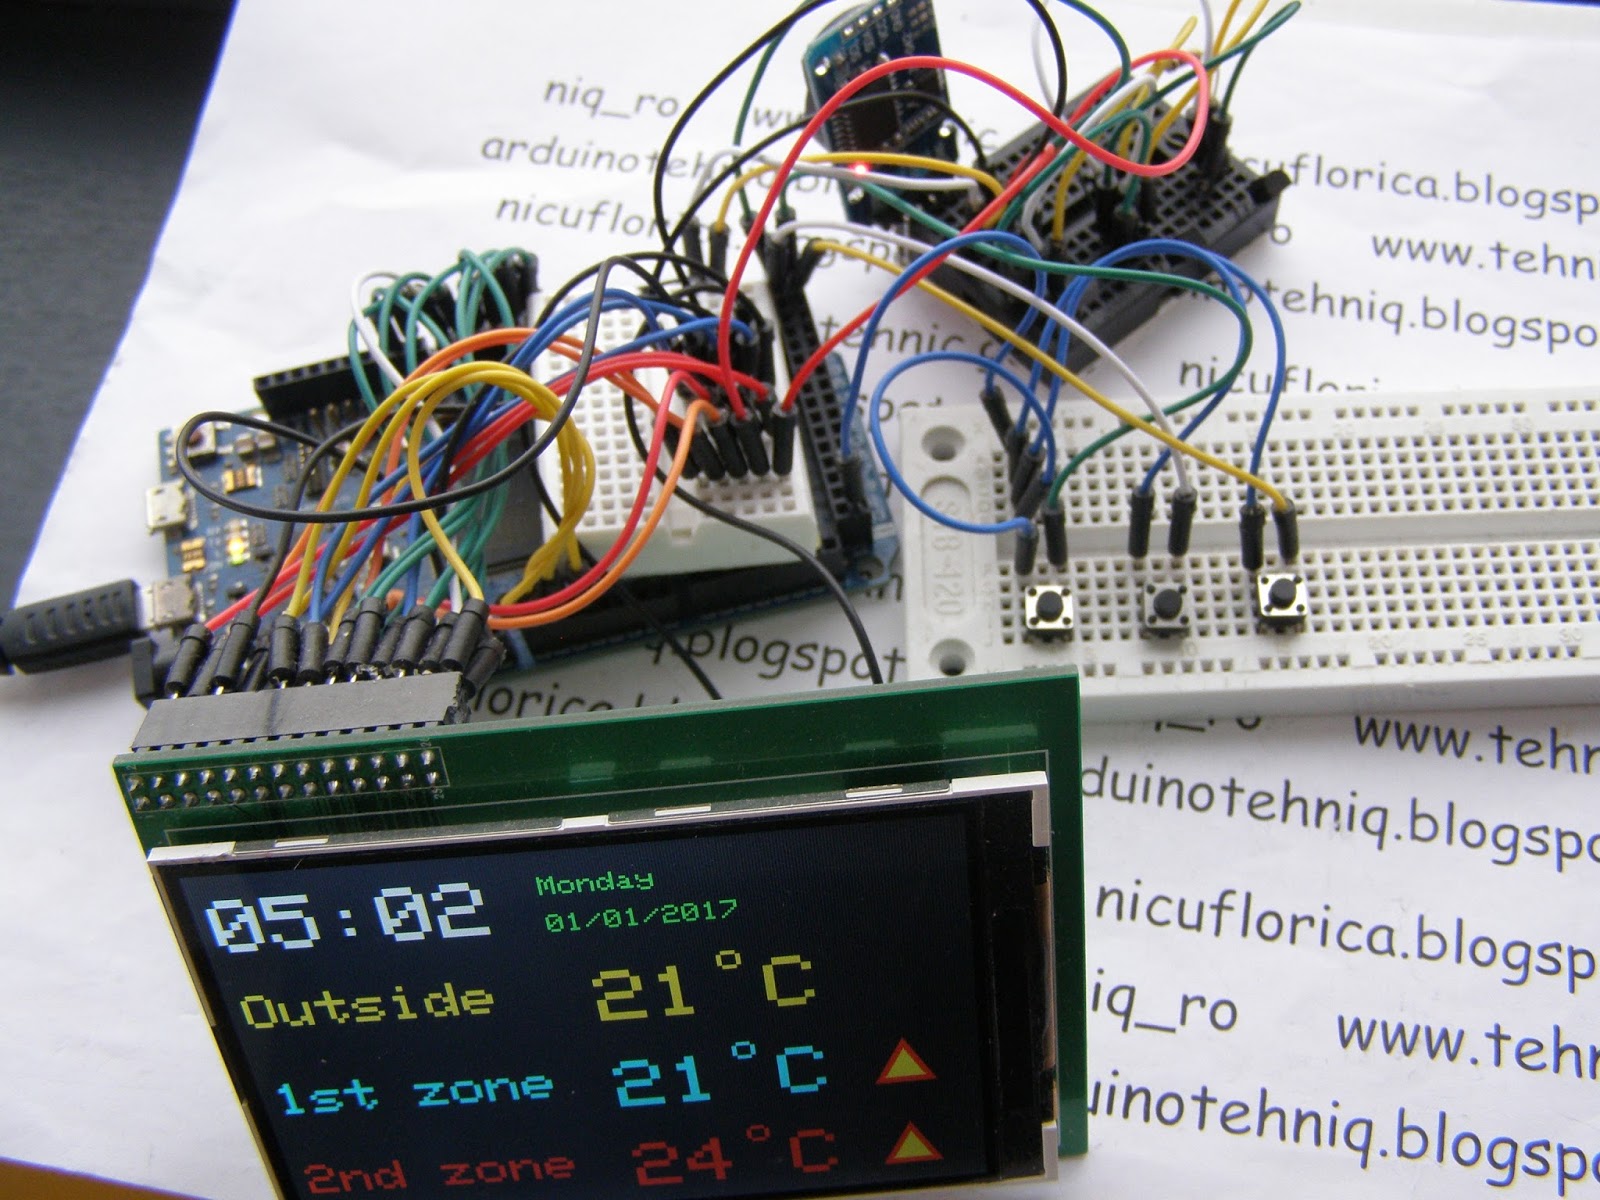 Viva Gate Experiment Nicu FLORICA (niq_ro): Termostat dual cu Arduino Due si afisaj de 3,95"  (10cm)